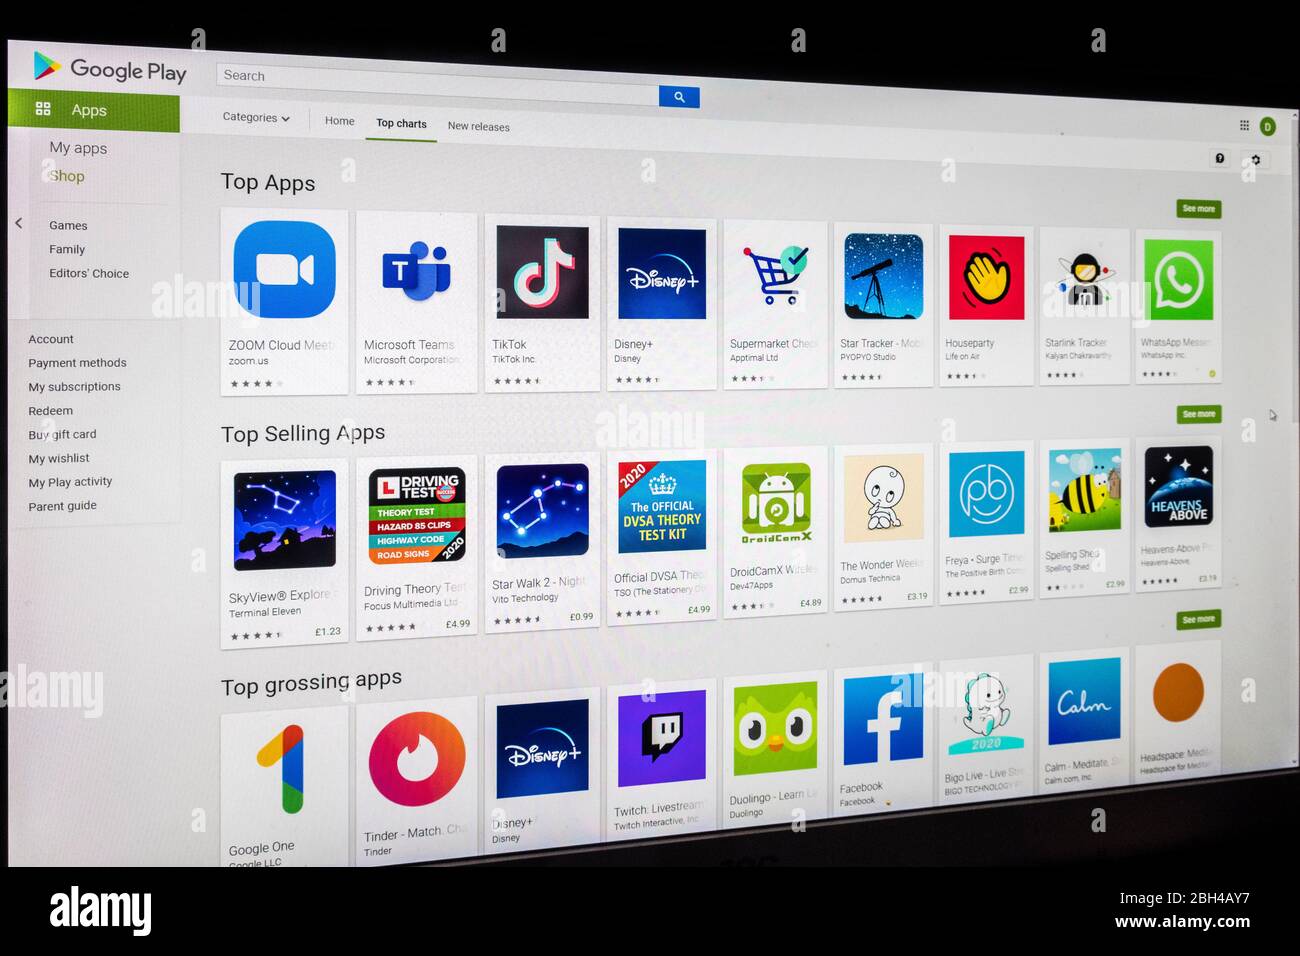 Google Play Website Top-Apps im April 2020 gehören Zoom Cloud, Microsoft Teams und TikTok. Computer Monitor Bildschirm zeigt Website mit Top-Apps. Stockfoto